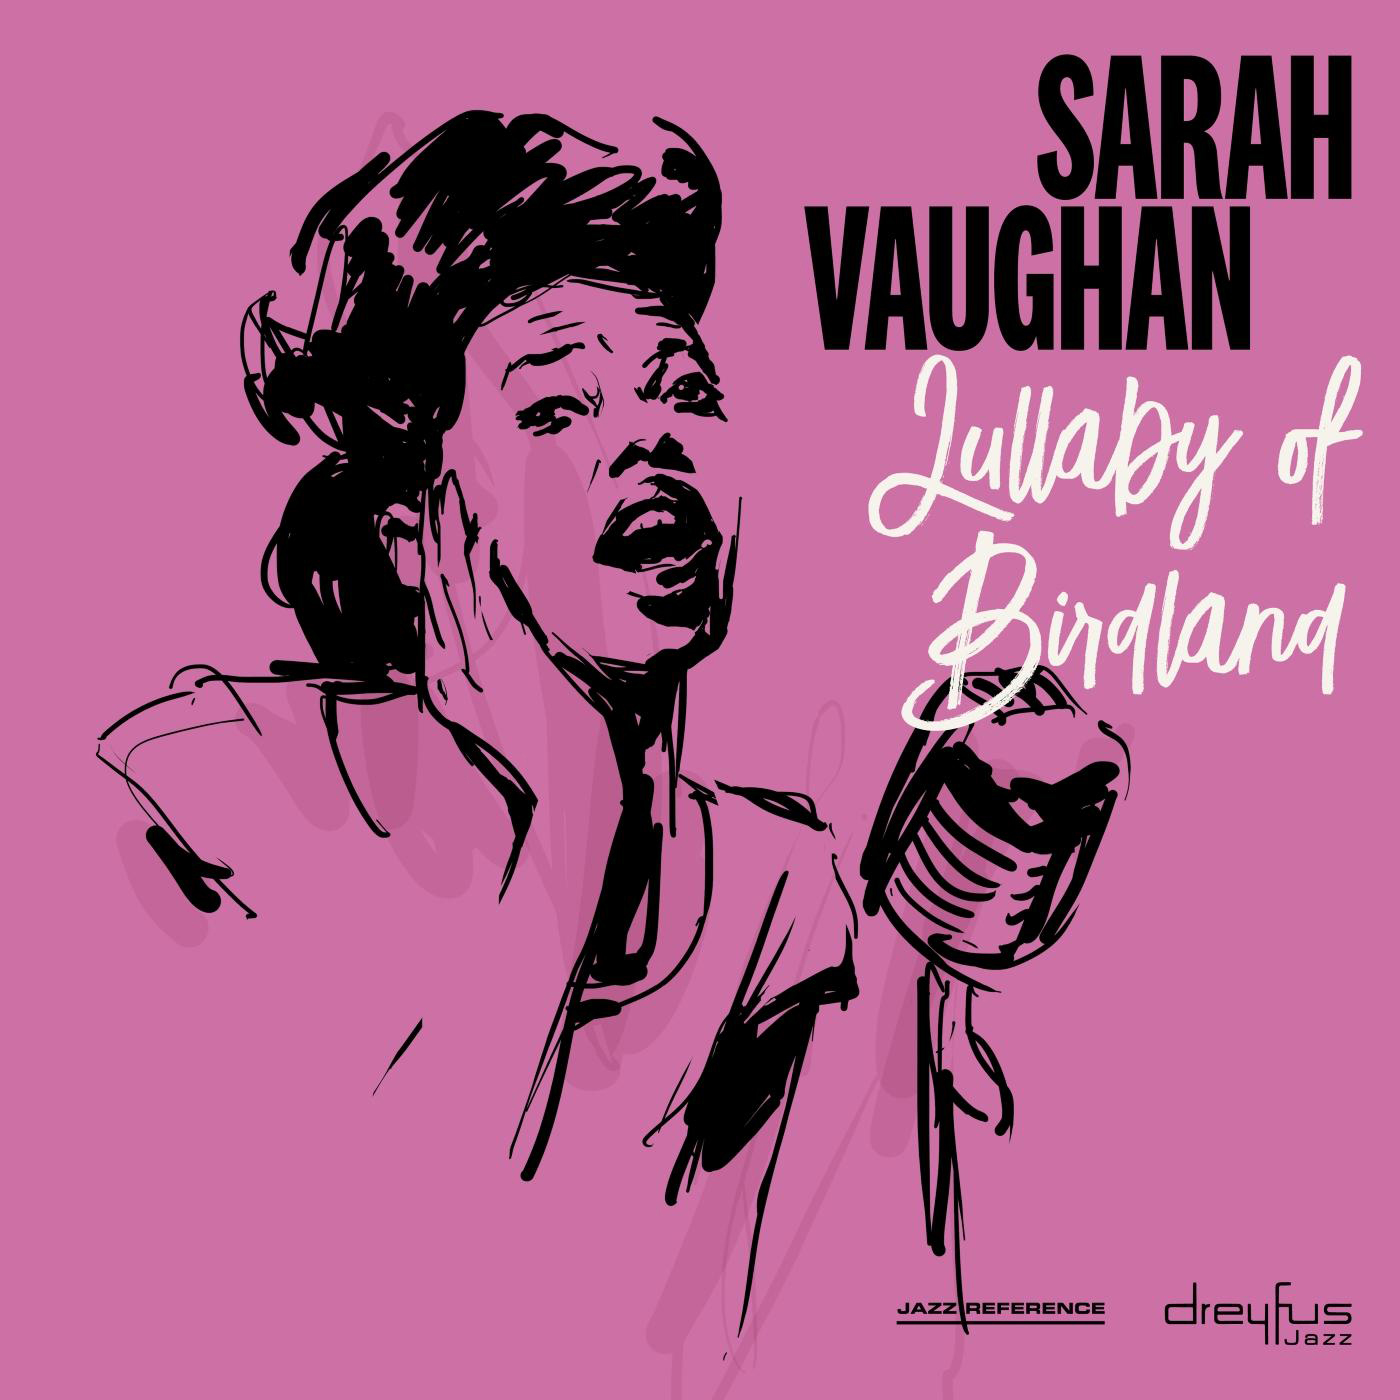 Sarah of (Vinyl) Birdland - Lullaby Vaughan -